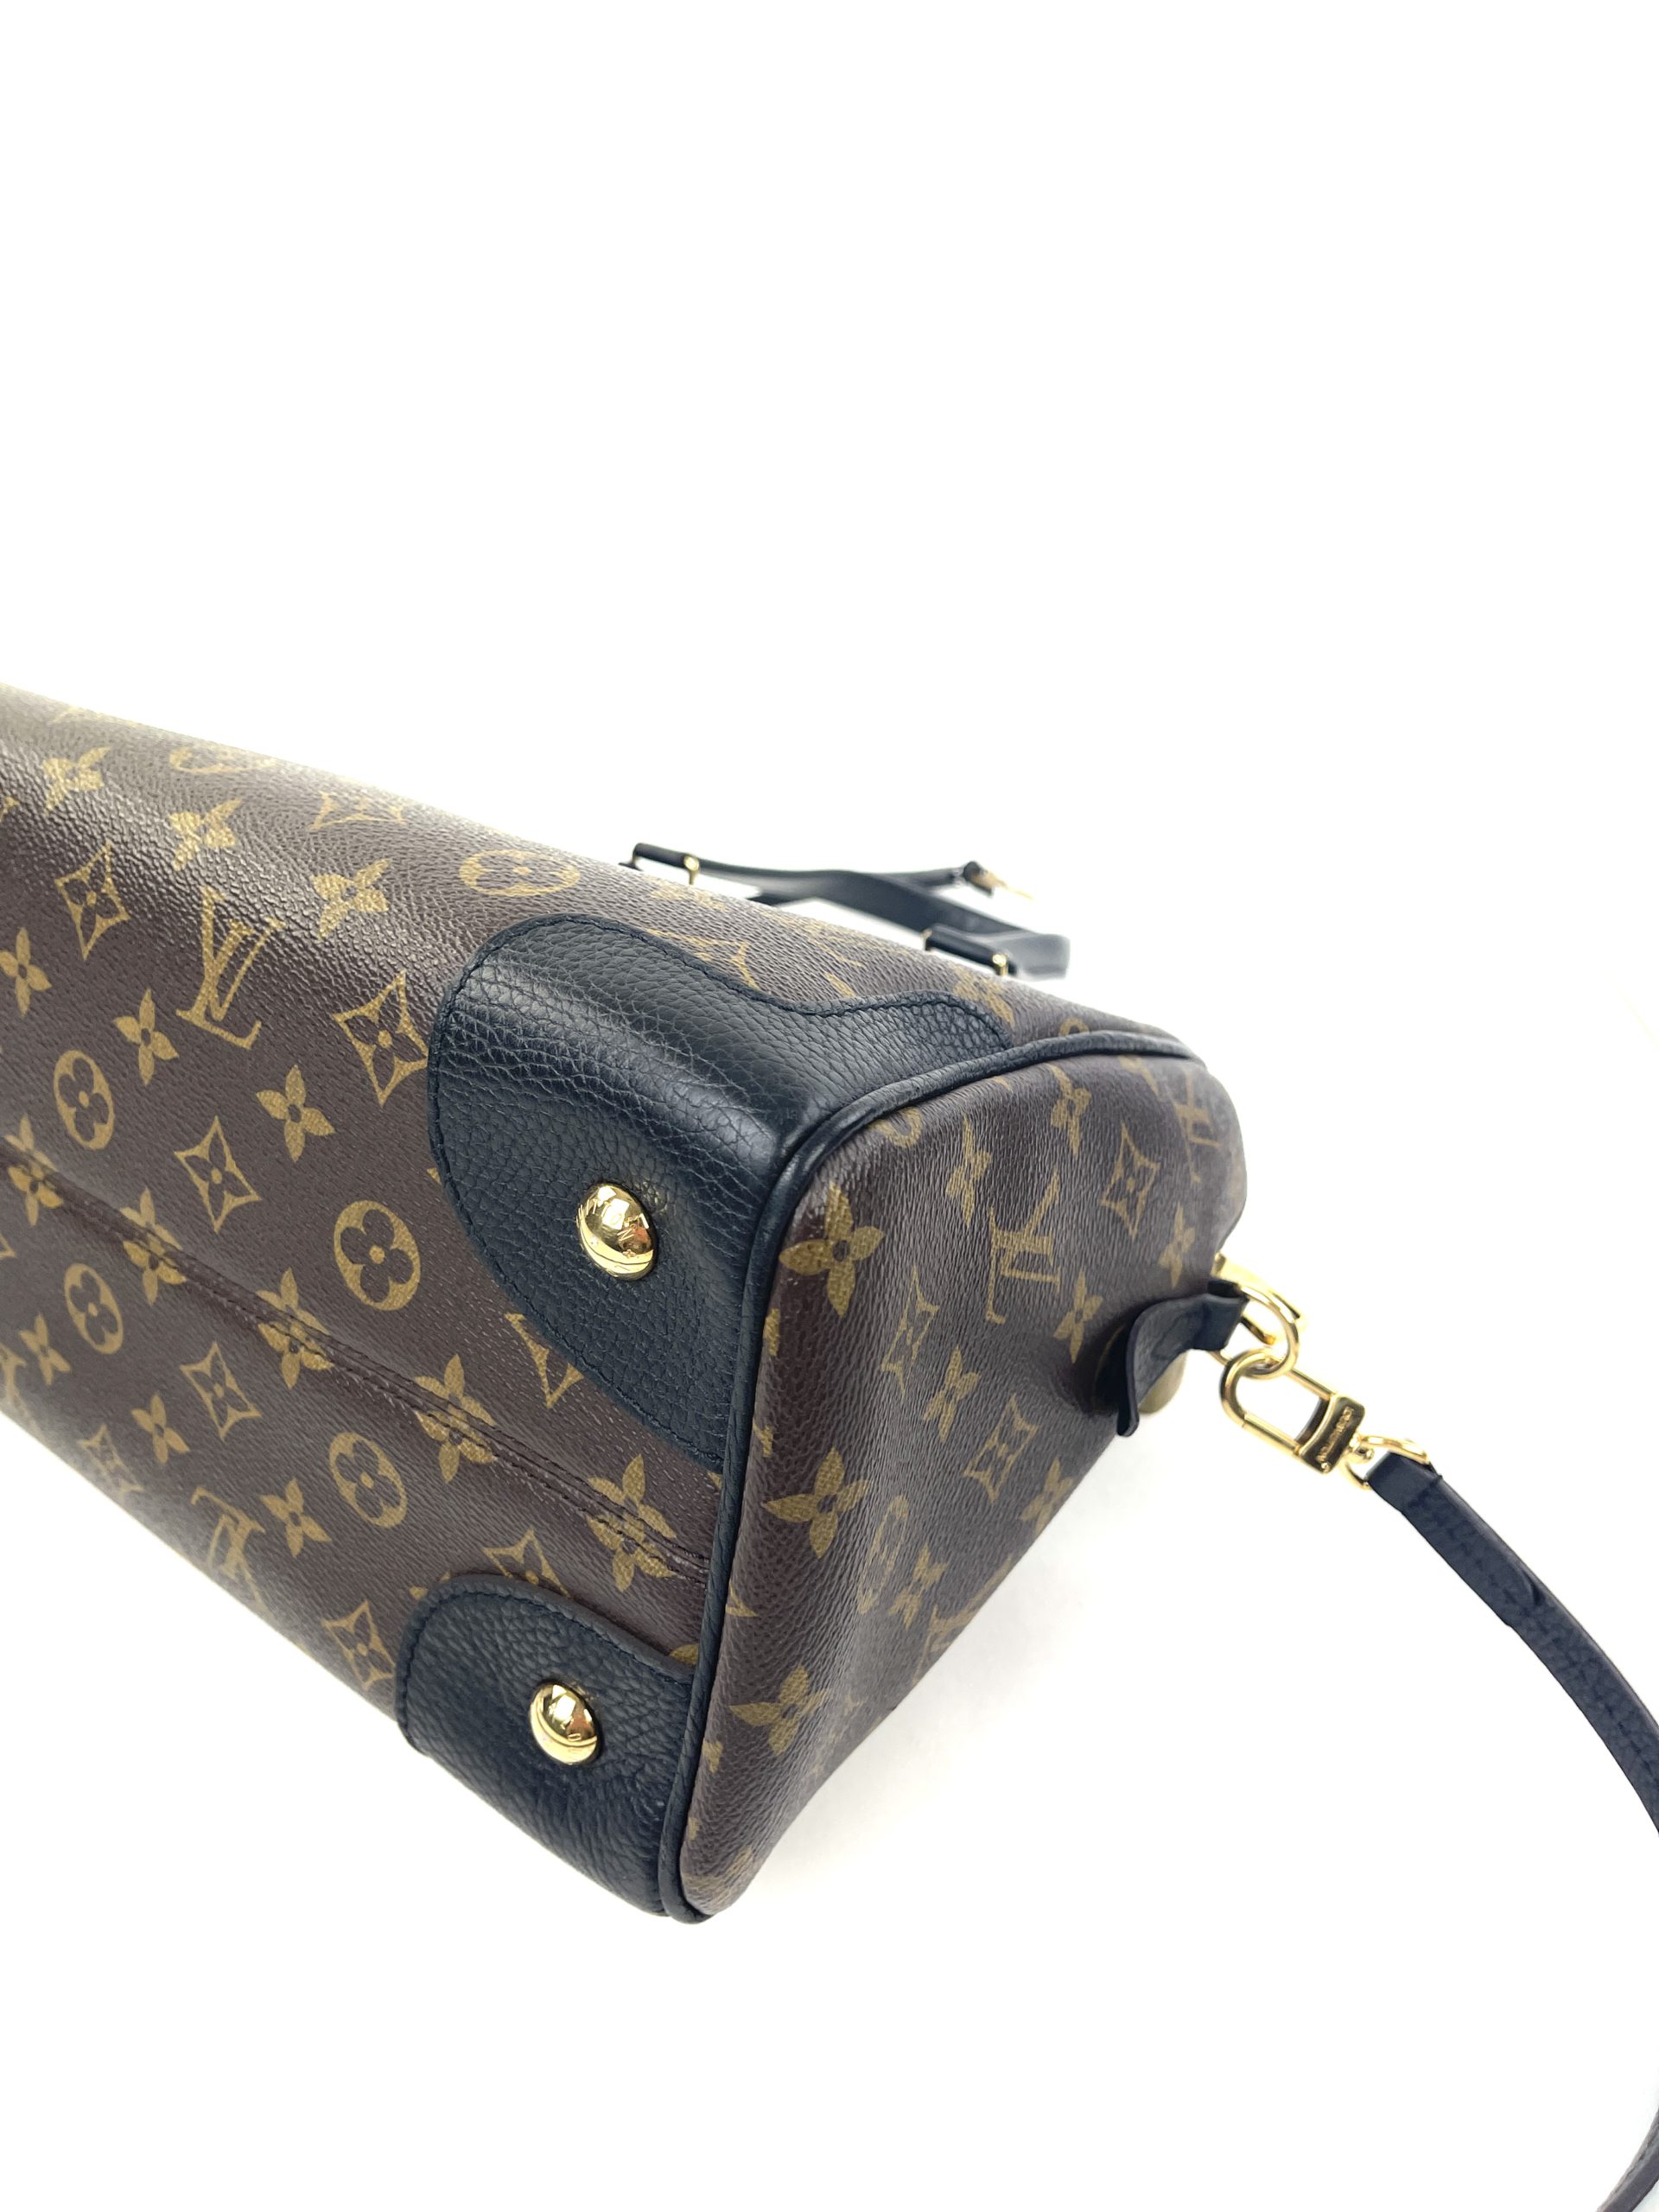 Authentic Louis Vuitton Monogram Noir Retiro NM Handbag/Shoulder